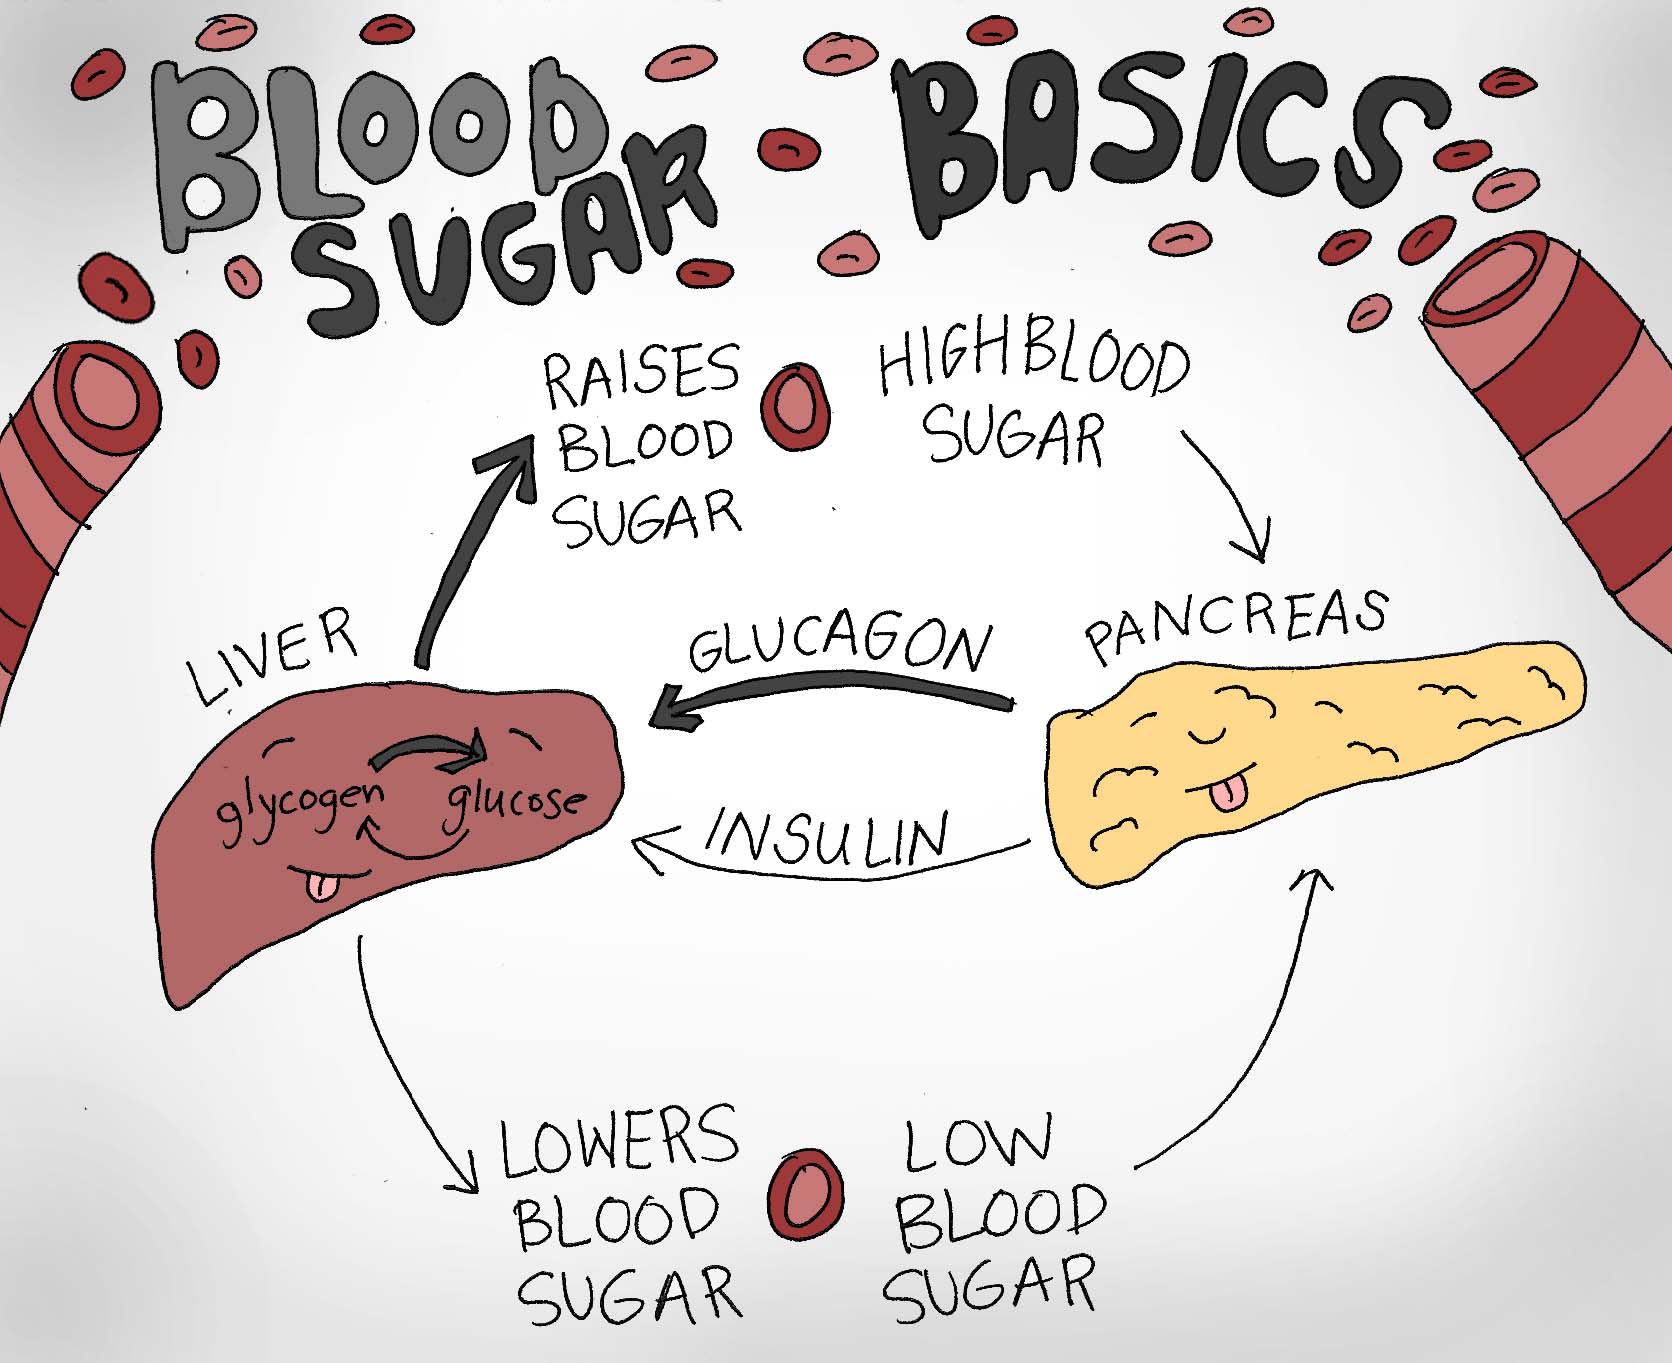 Blood sugar Basics.